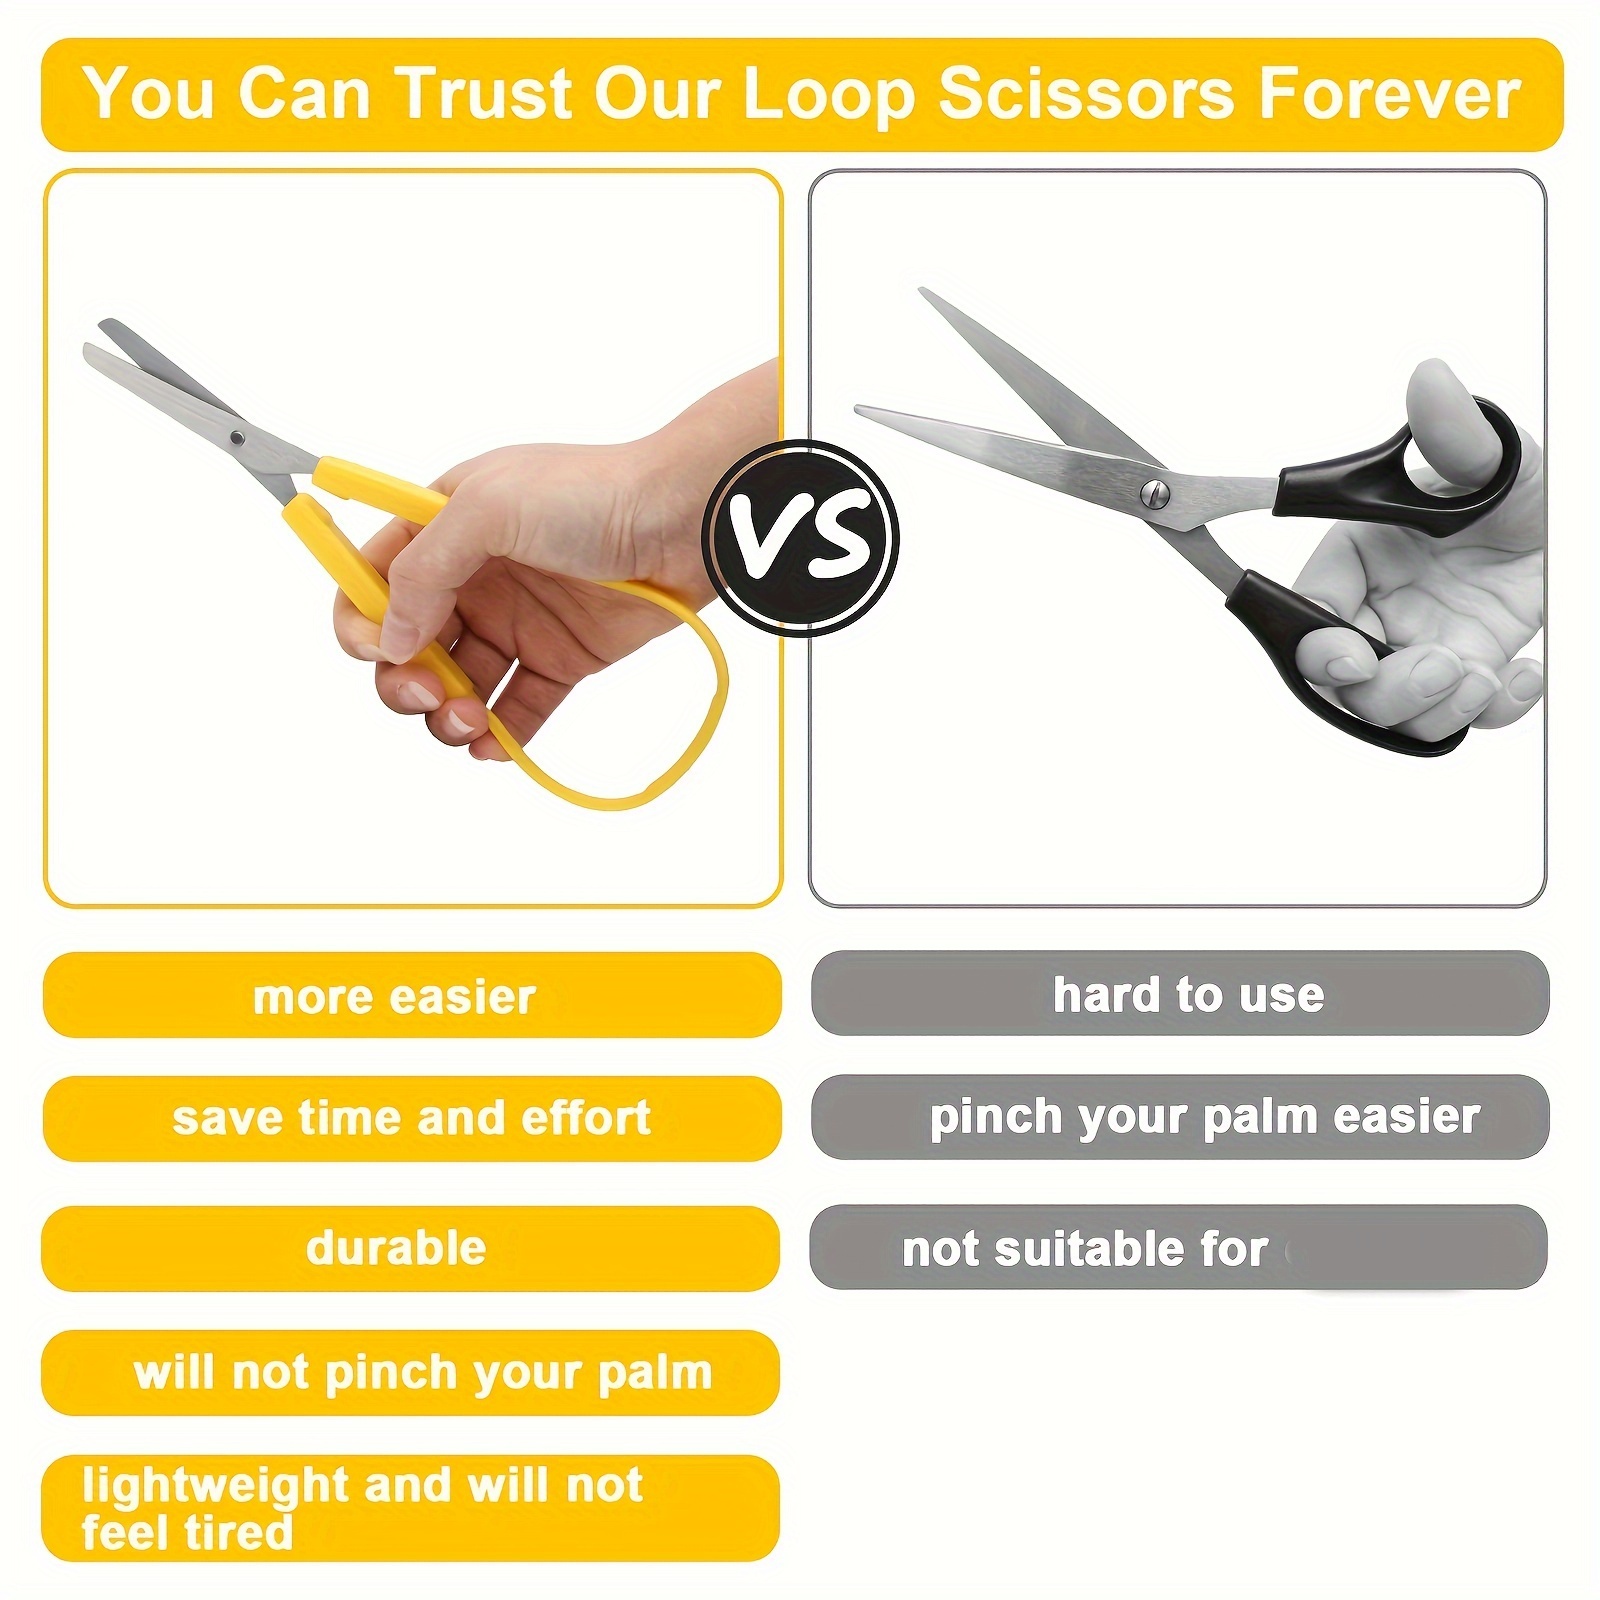 Training Loop Smart Scissors